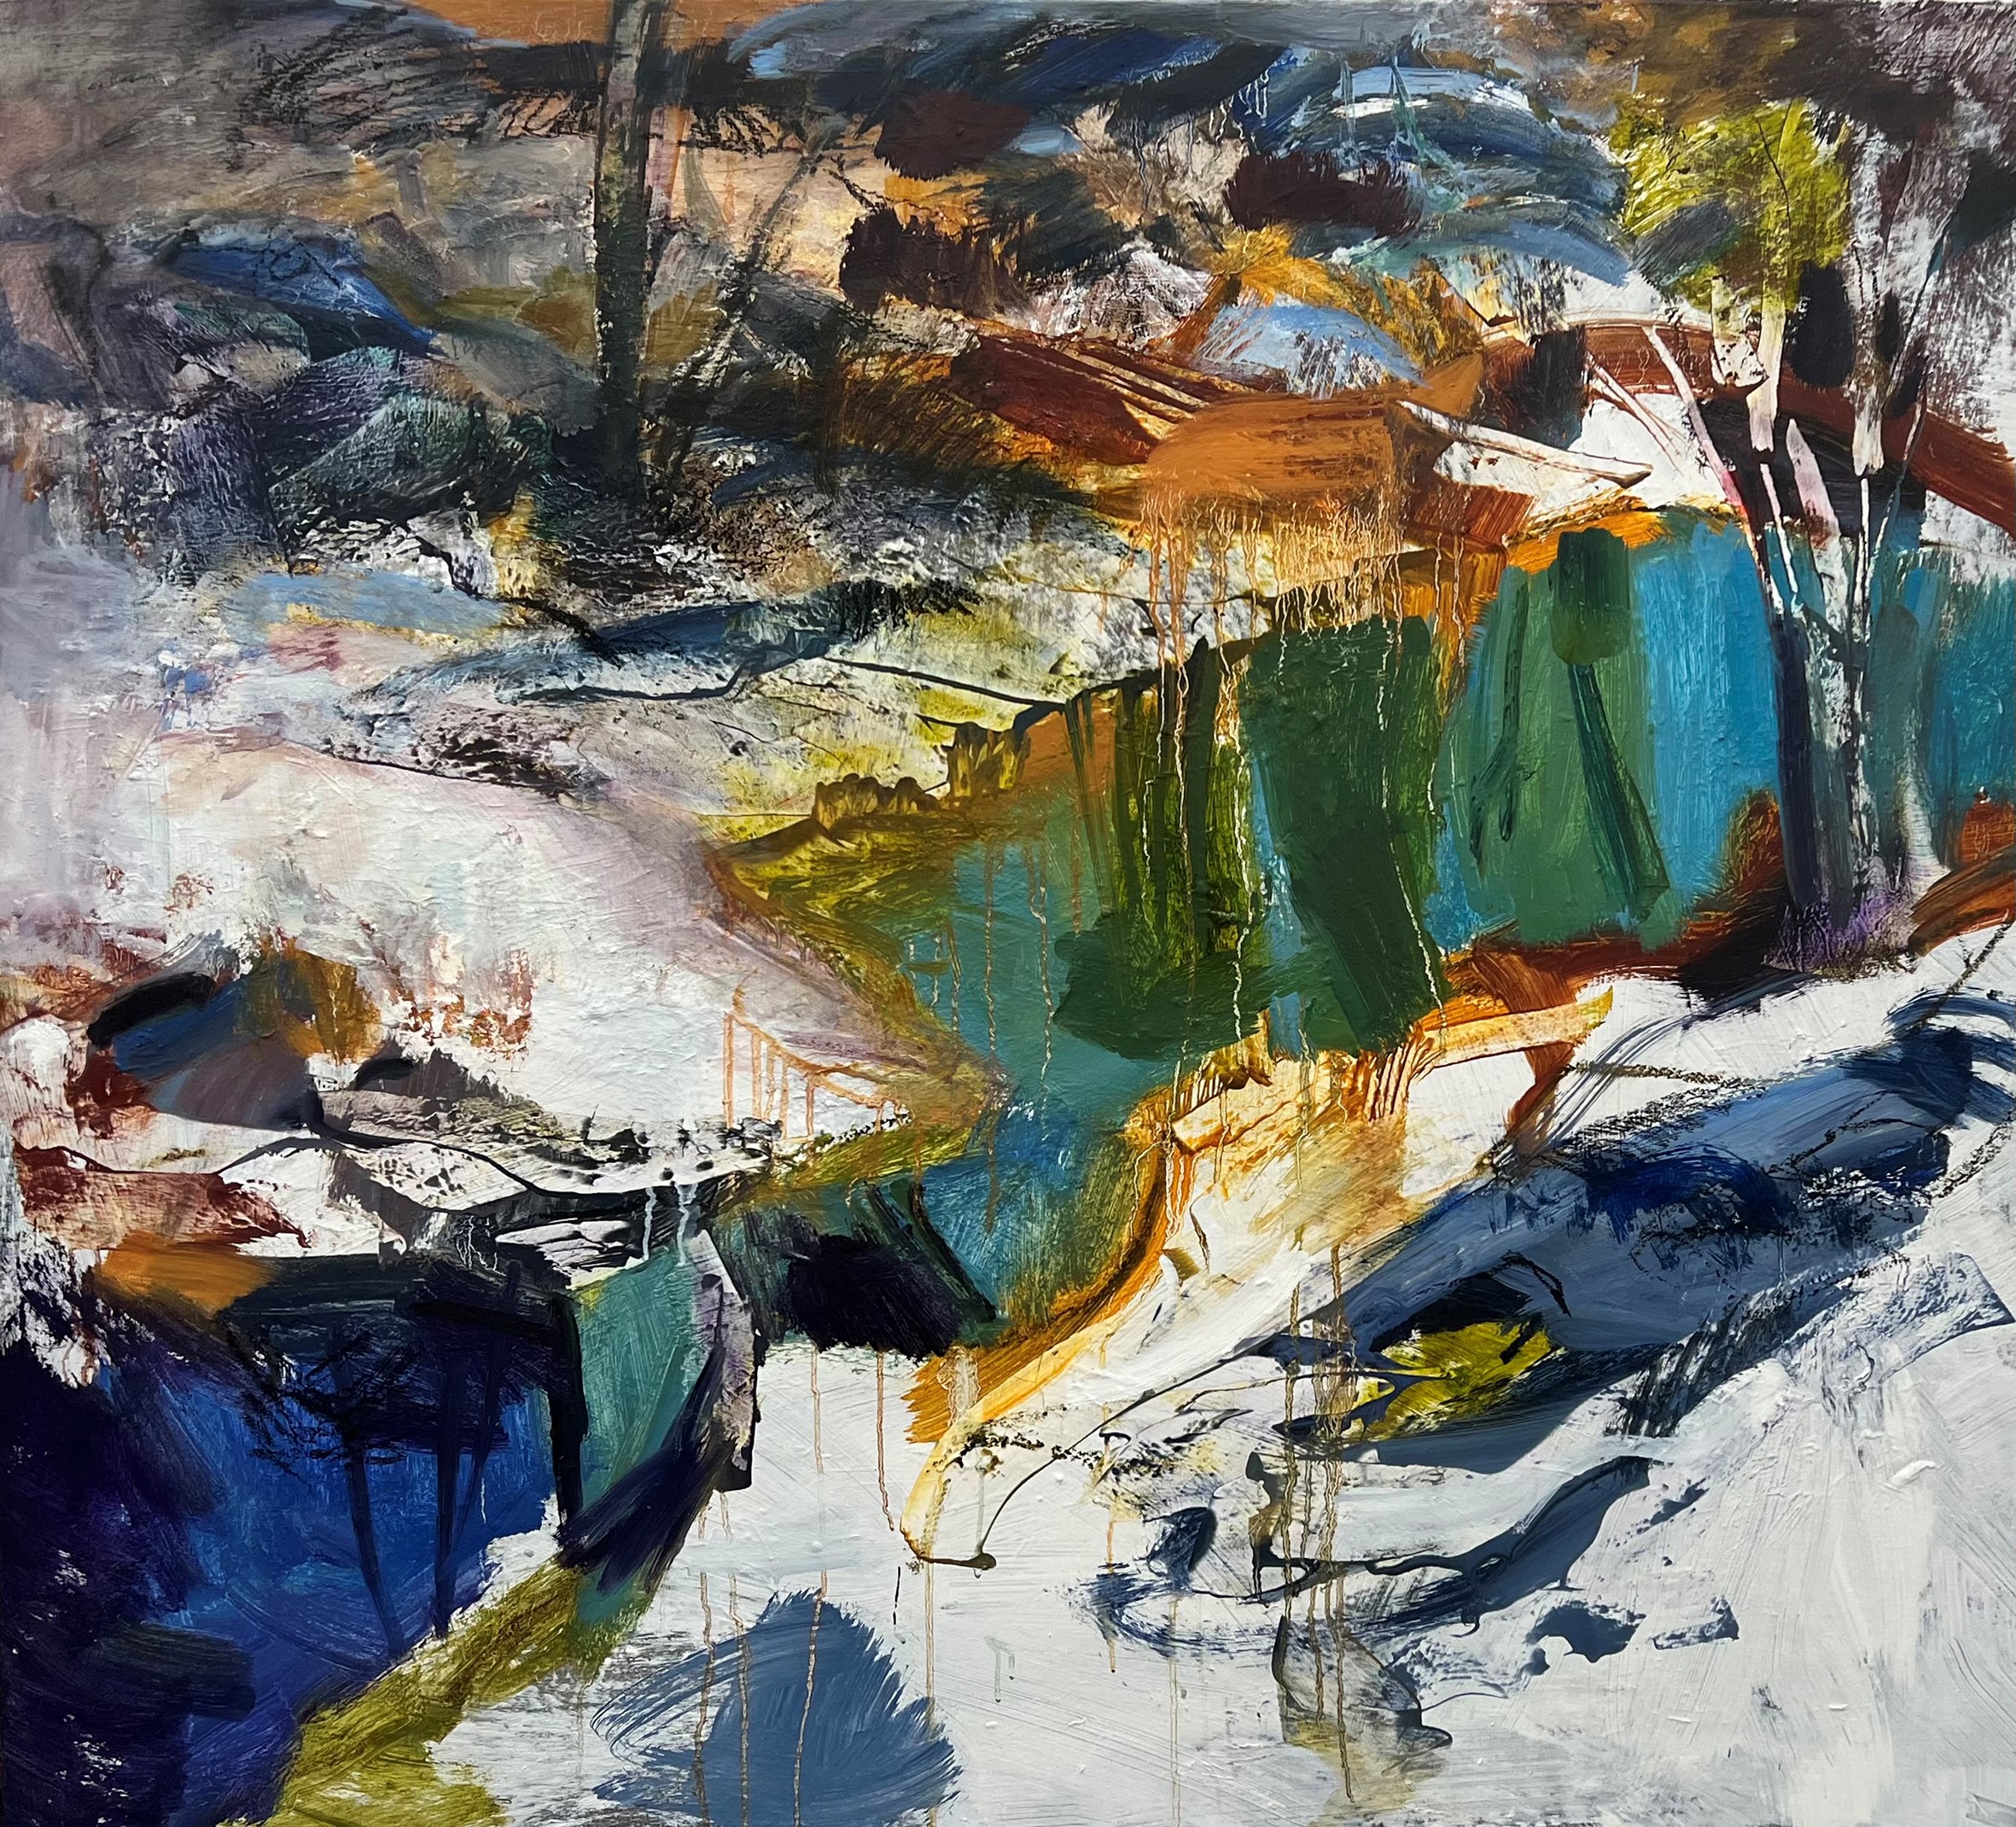 Kerry McInnis 'Snow Creek' oil on canvas 92 x 102cm $9,000